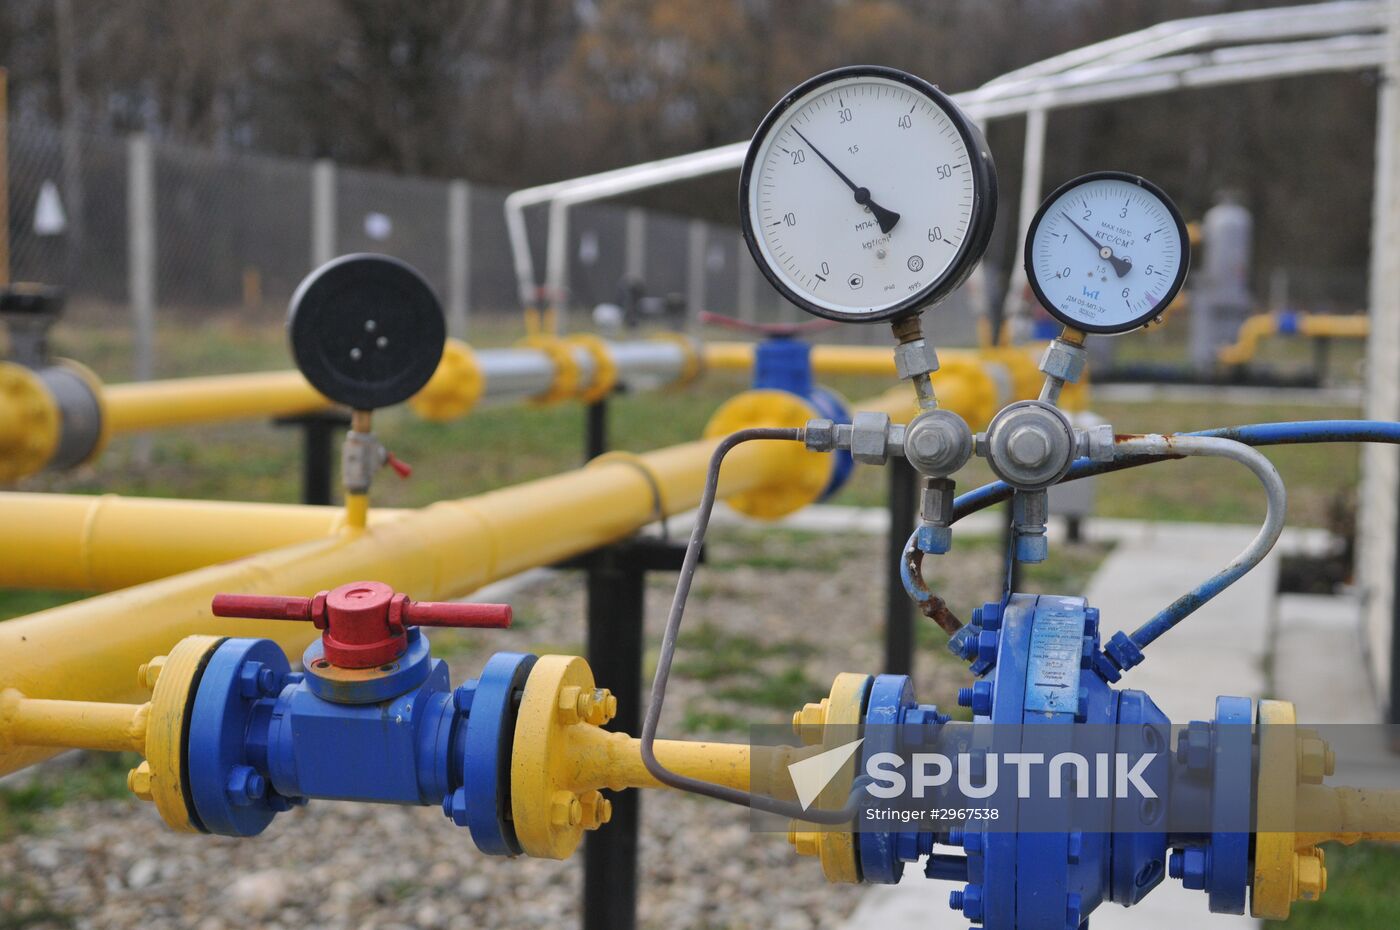 Gas extraction at Kolodnitskoye gas field in Lviv Region